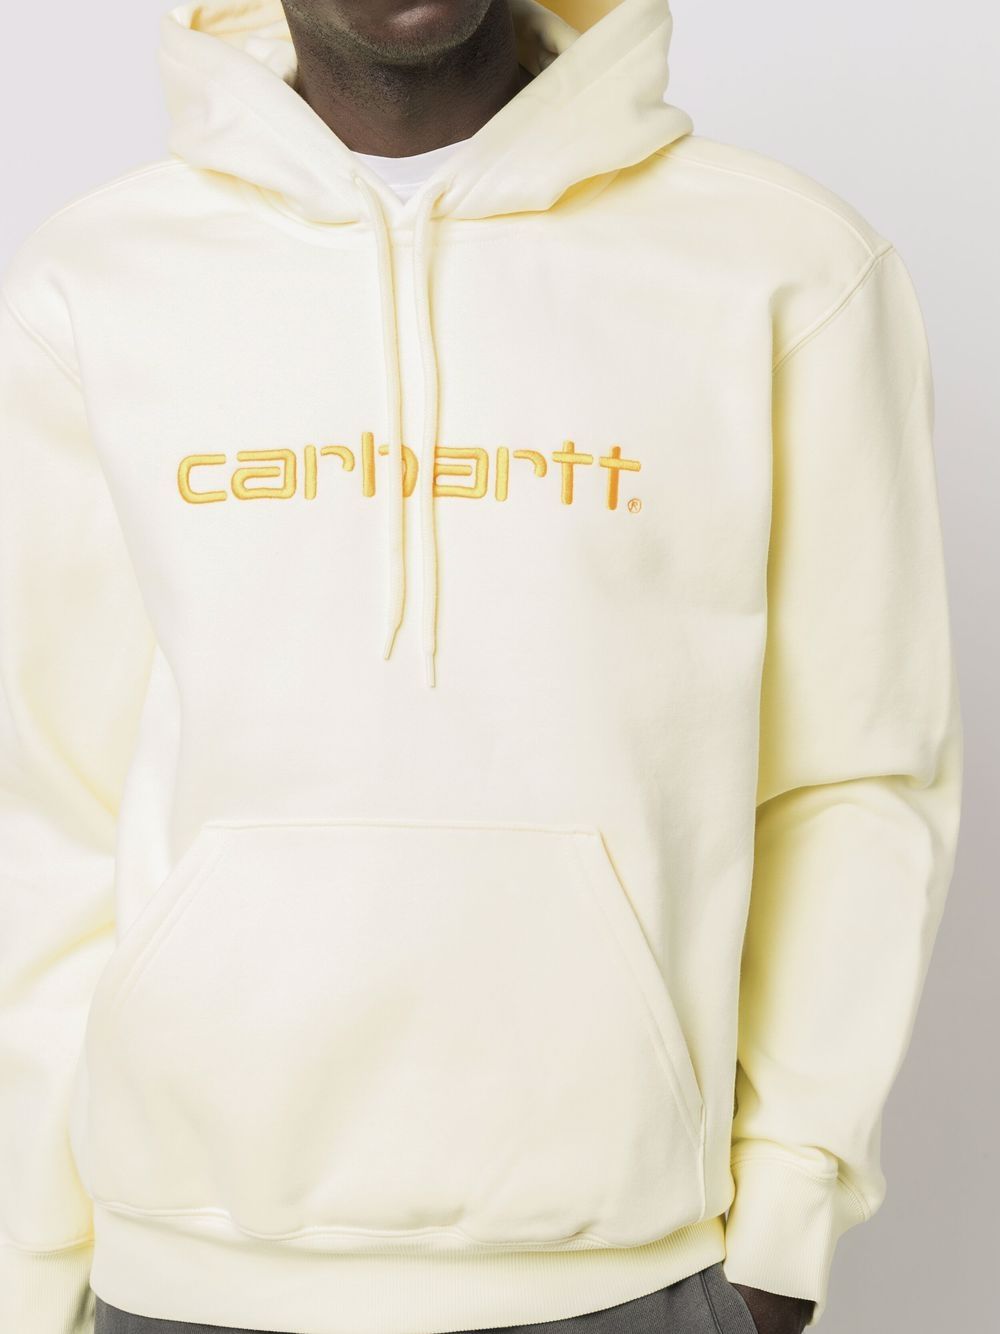 фото Carhartt wip худи с вышитым логотипом